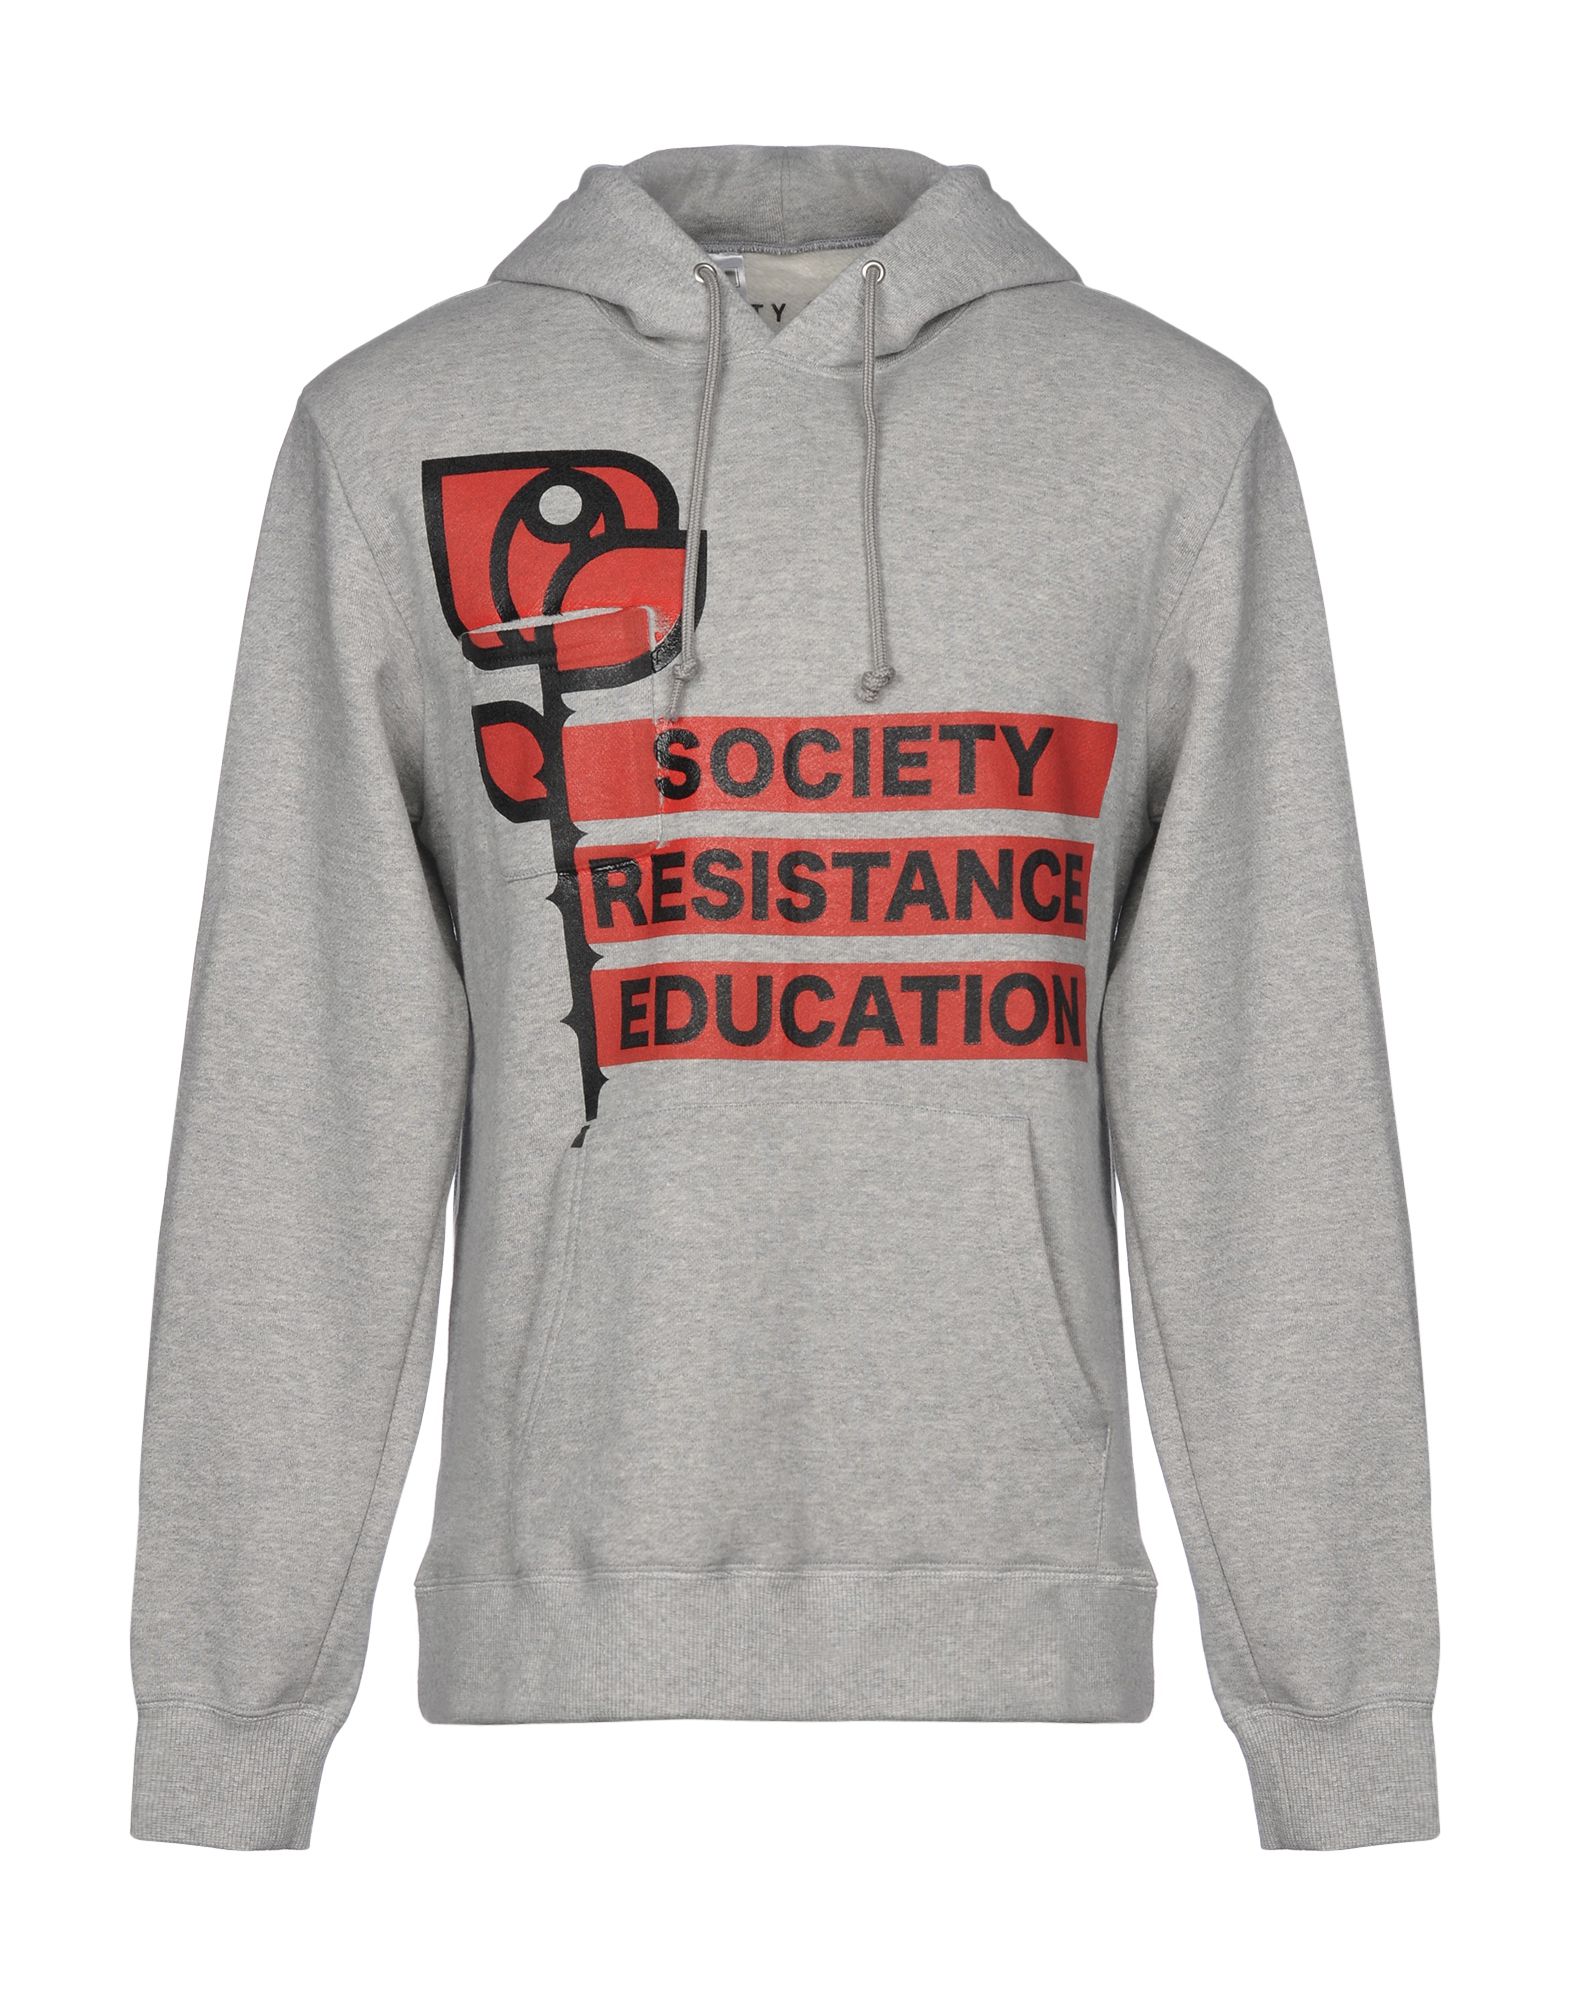 Society одежда. Society Hoodie. Eastwood Society кофта. Интеллигентное общество кофта.